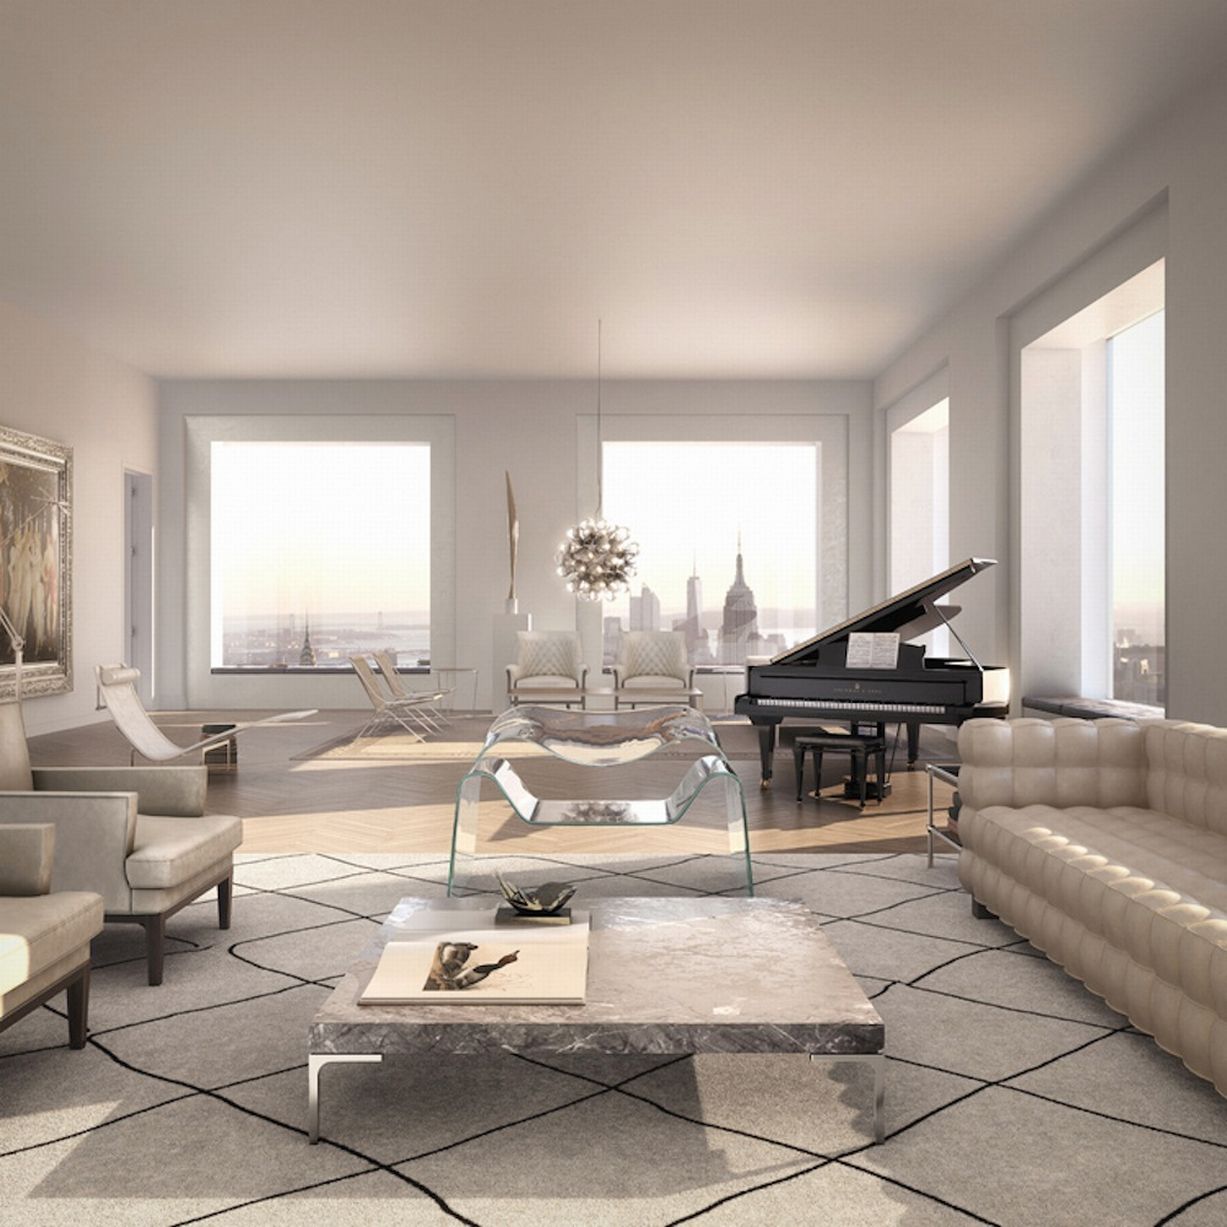 $95 Million Dollar Luxury Penthouse in New York-01